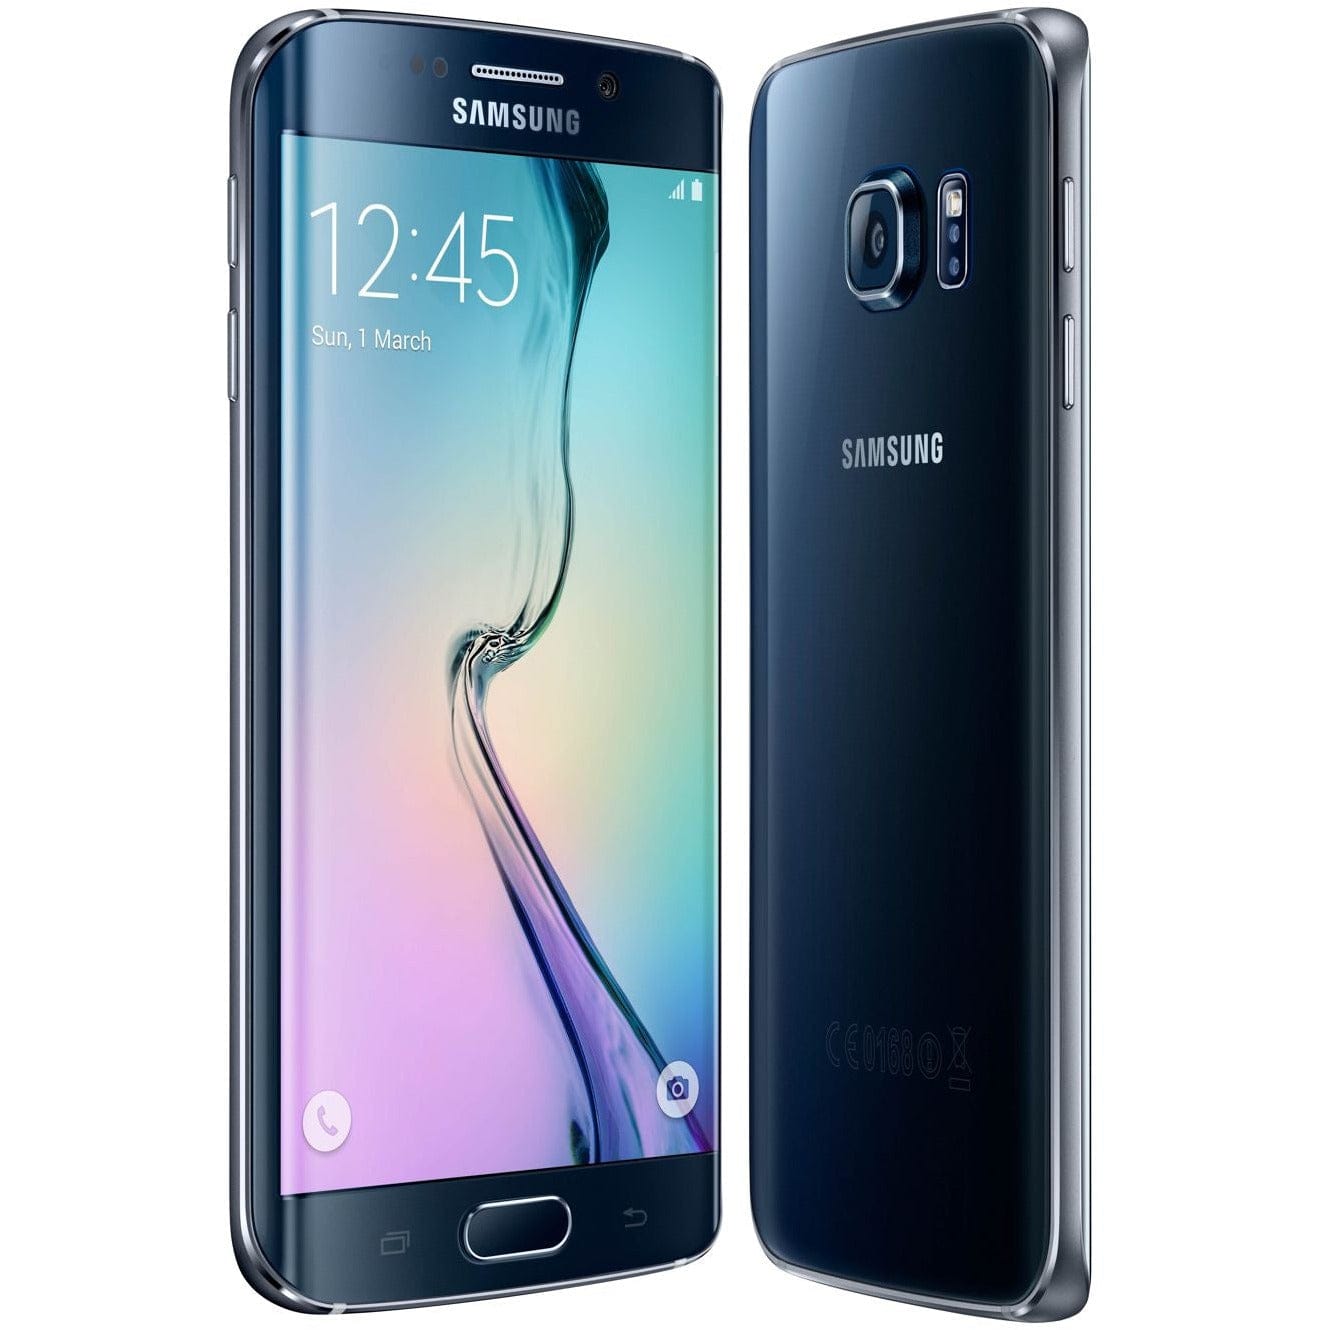 Samsung Galaxy S6 edge+ - 64 GB - Black Sapphire - Verizon Unlocked -